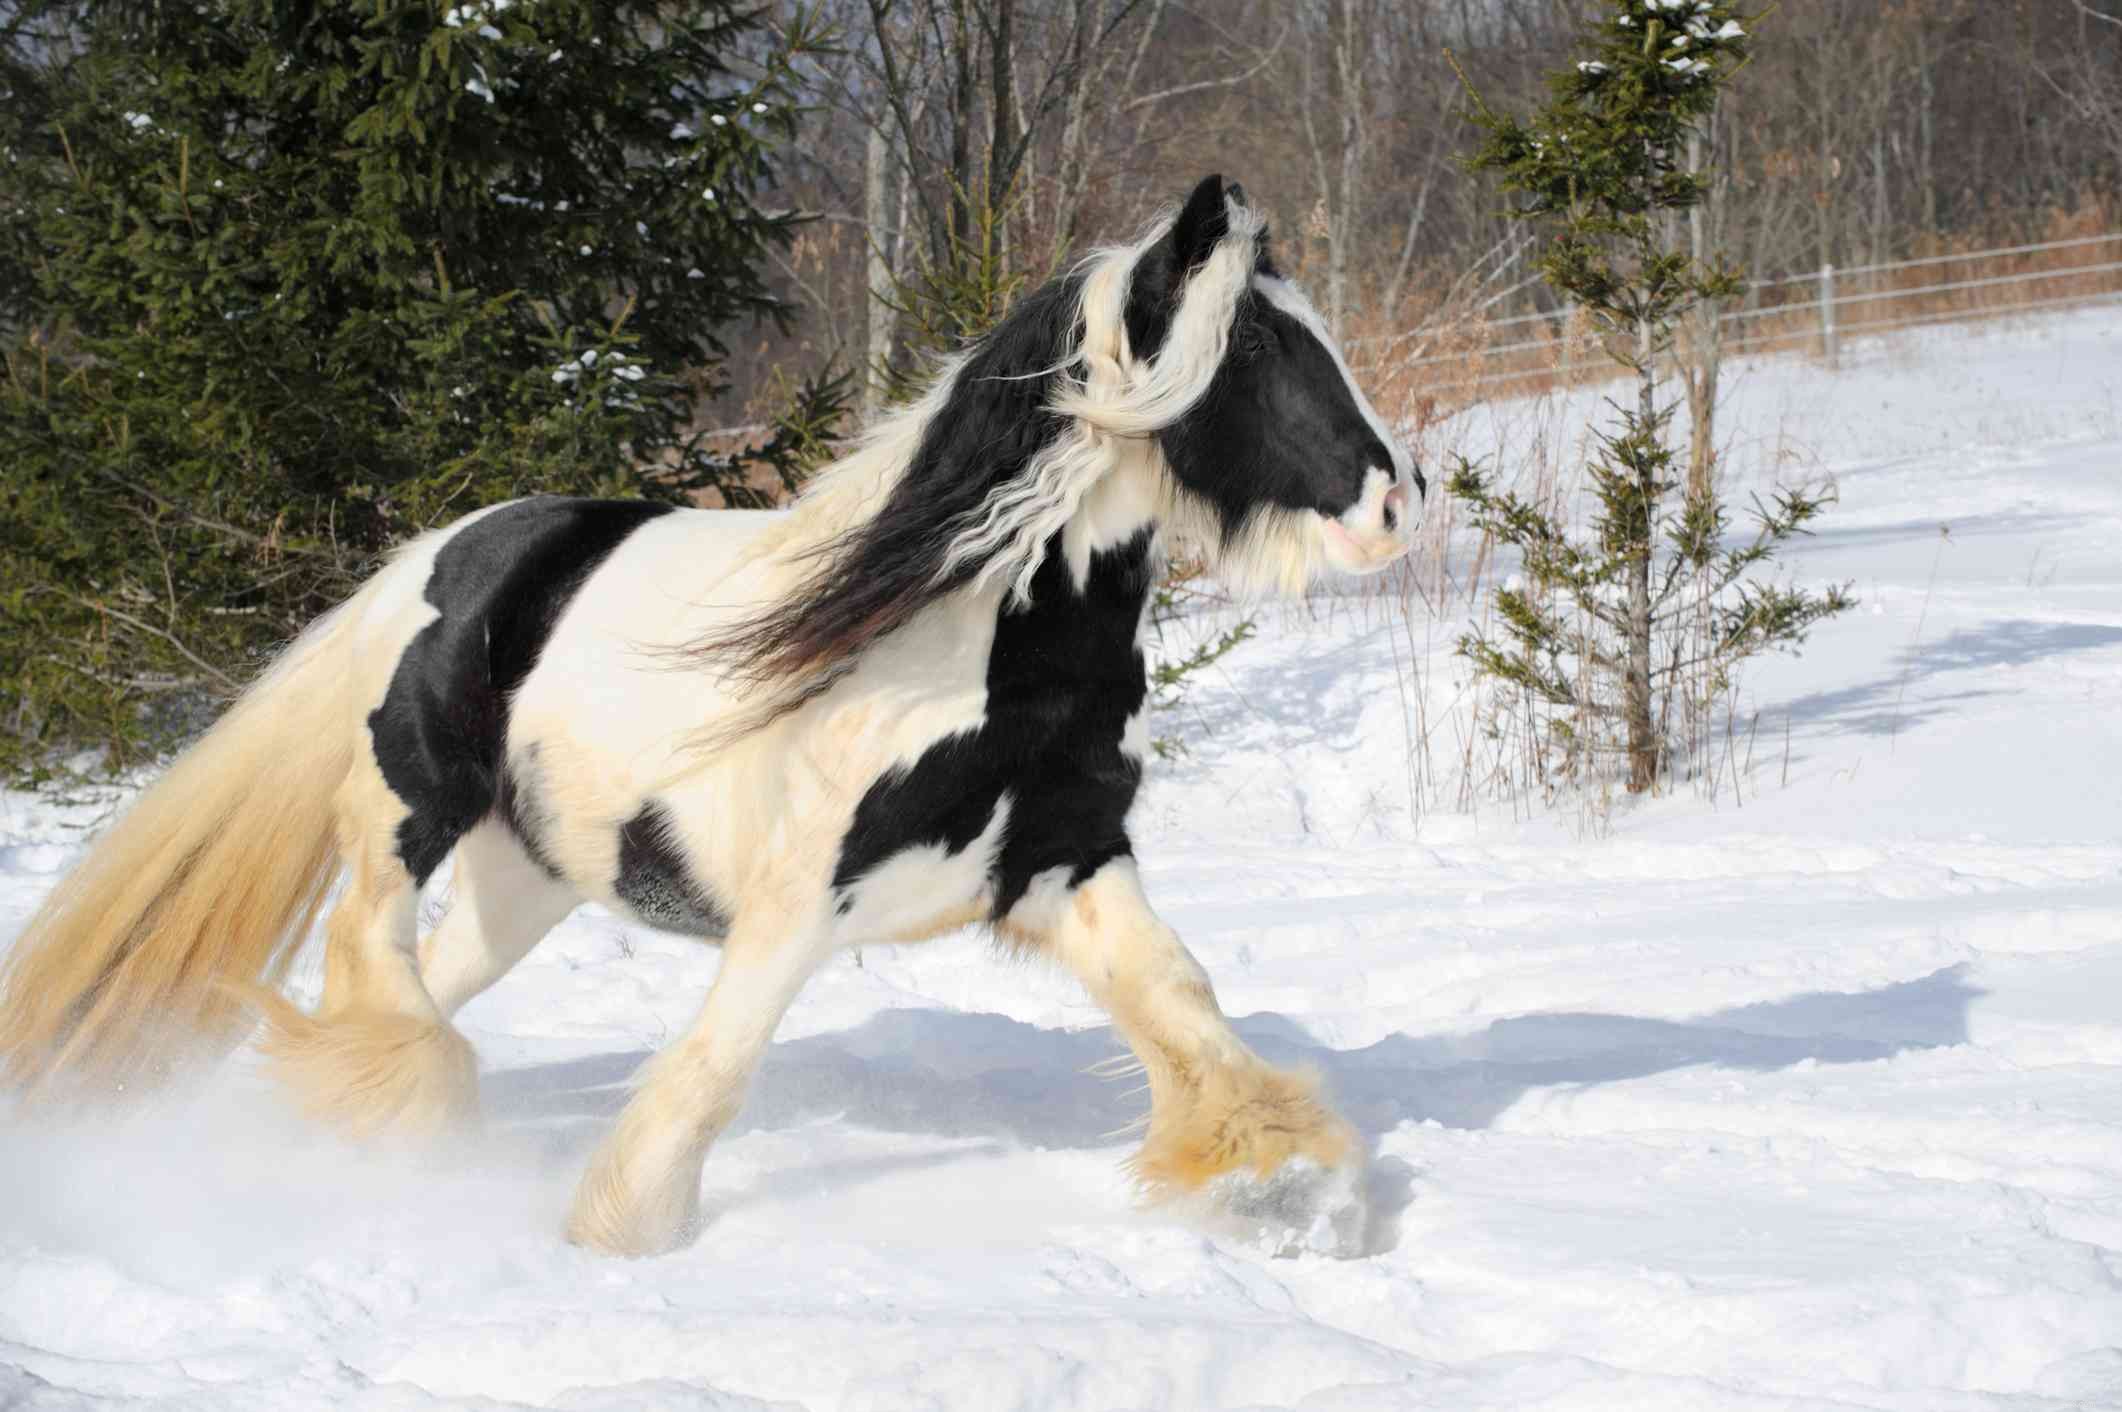 Gypsy Vanner:perfil da raça do cavalo